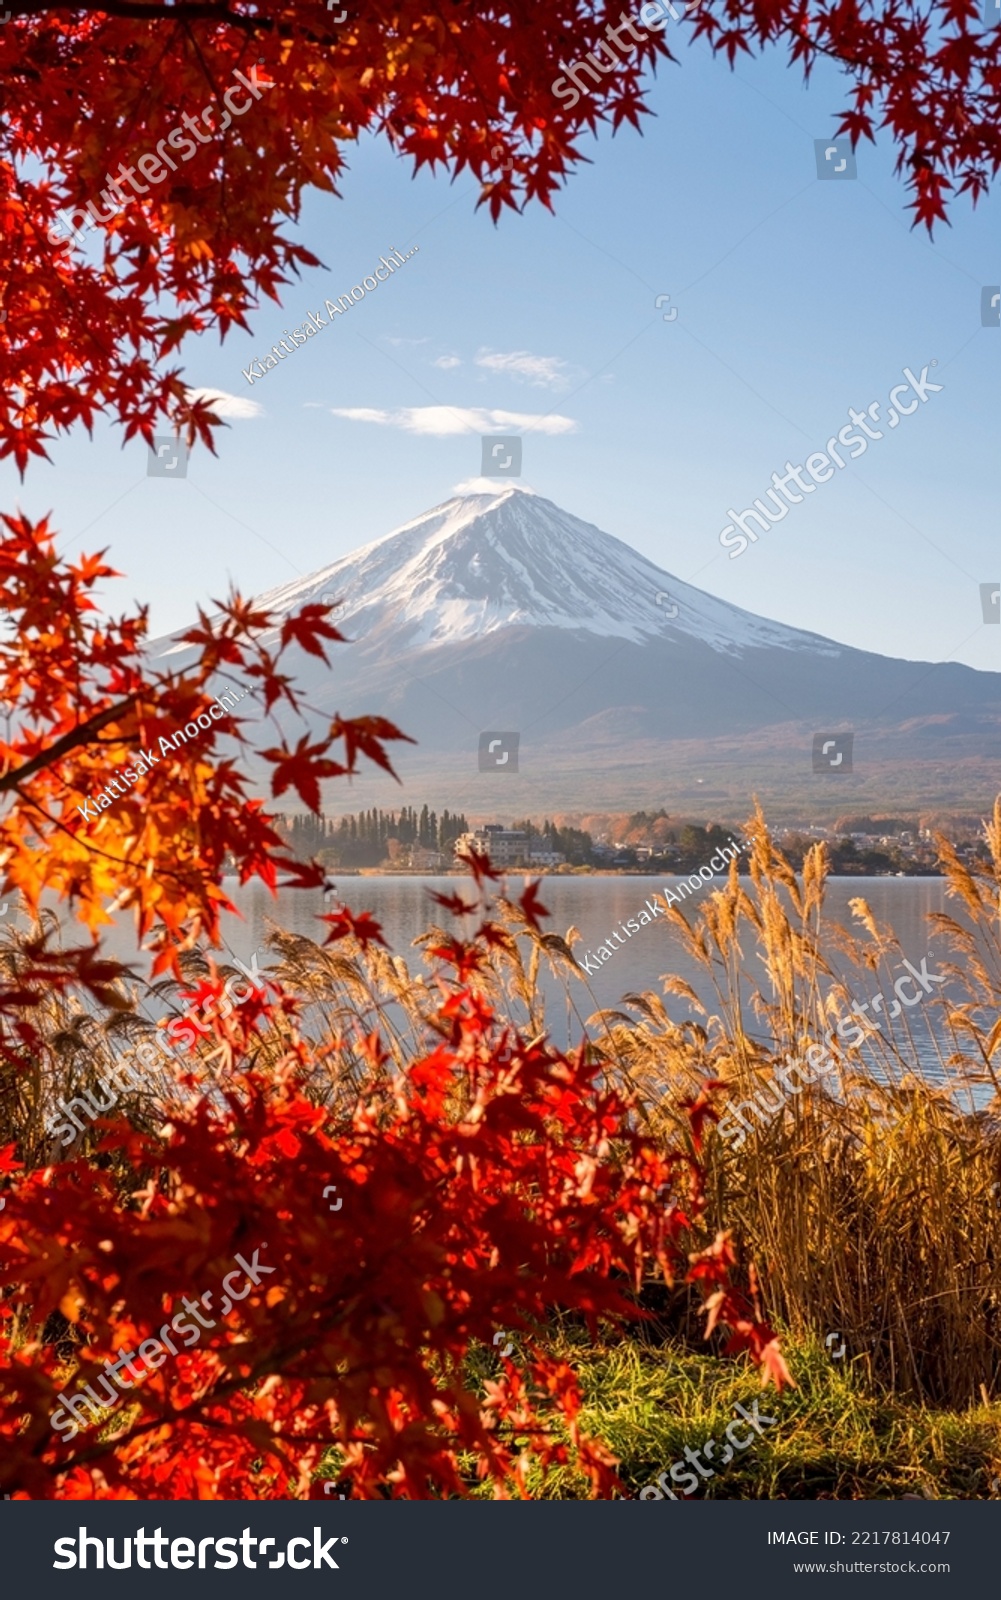 Aerial Skyline Landscape of Fuji Mountain with Beautiful Autumn Leaves. Iconic and Symbolic Mountain of Japan. Scenic Sunset Landscape of Fujisan at Evening Time, Kawaguchiko, Yamanashi, Japan. #2217814047